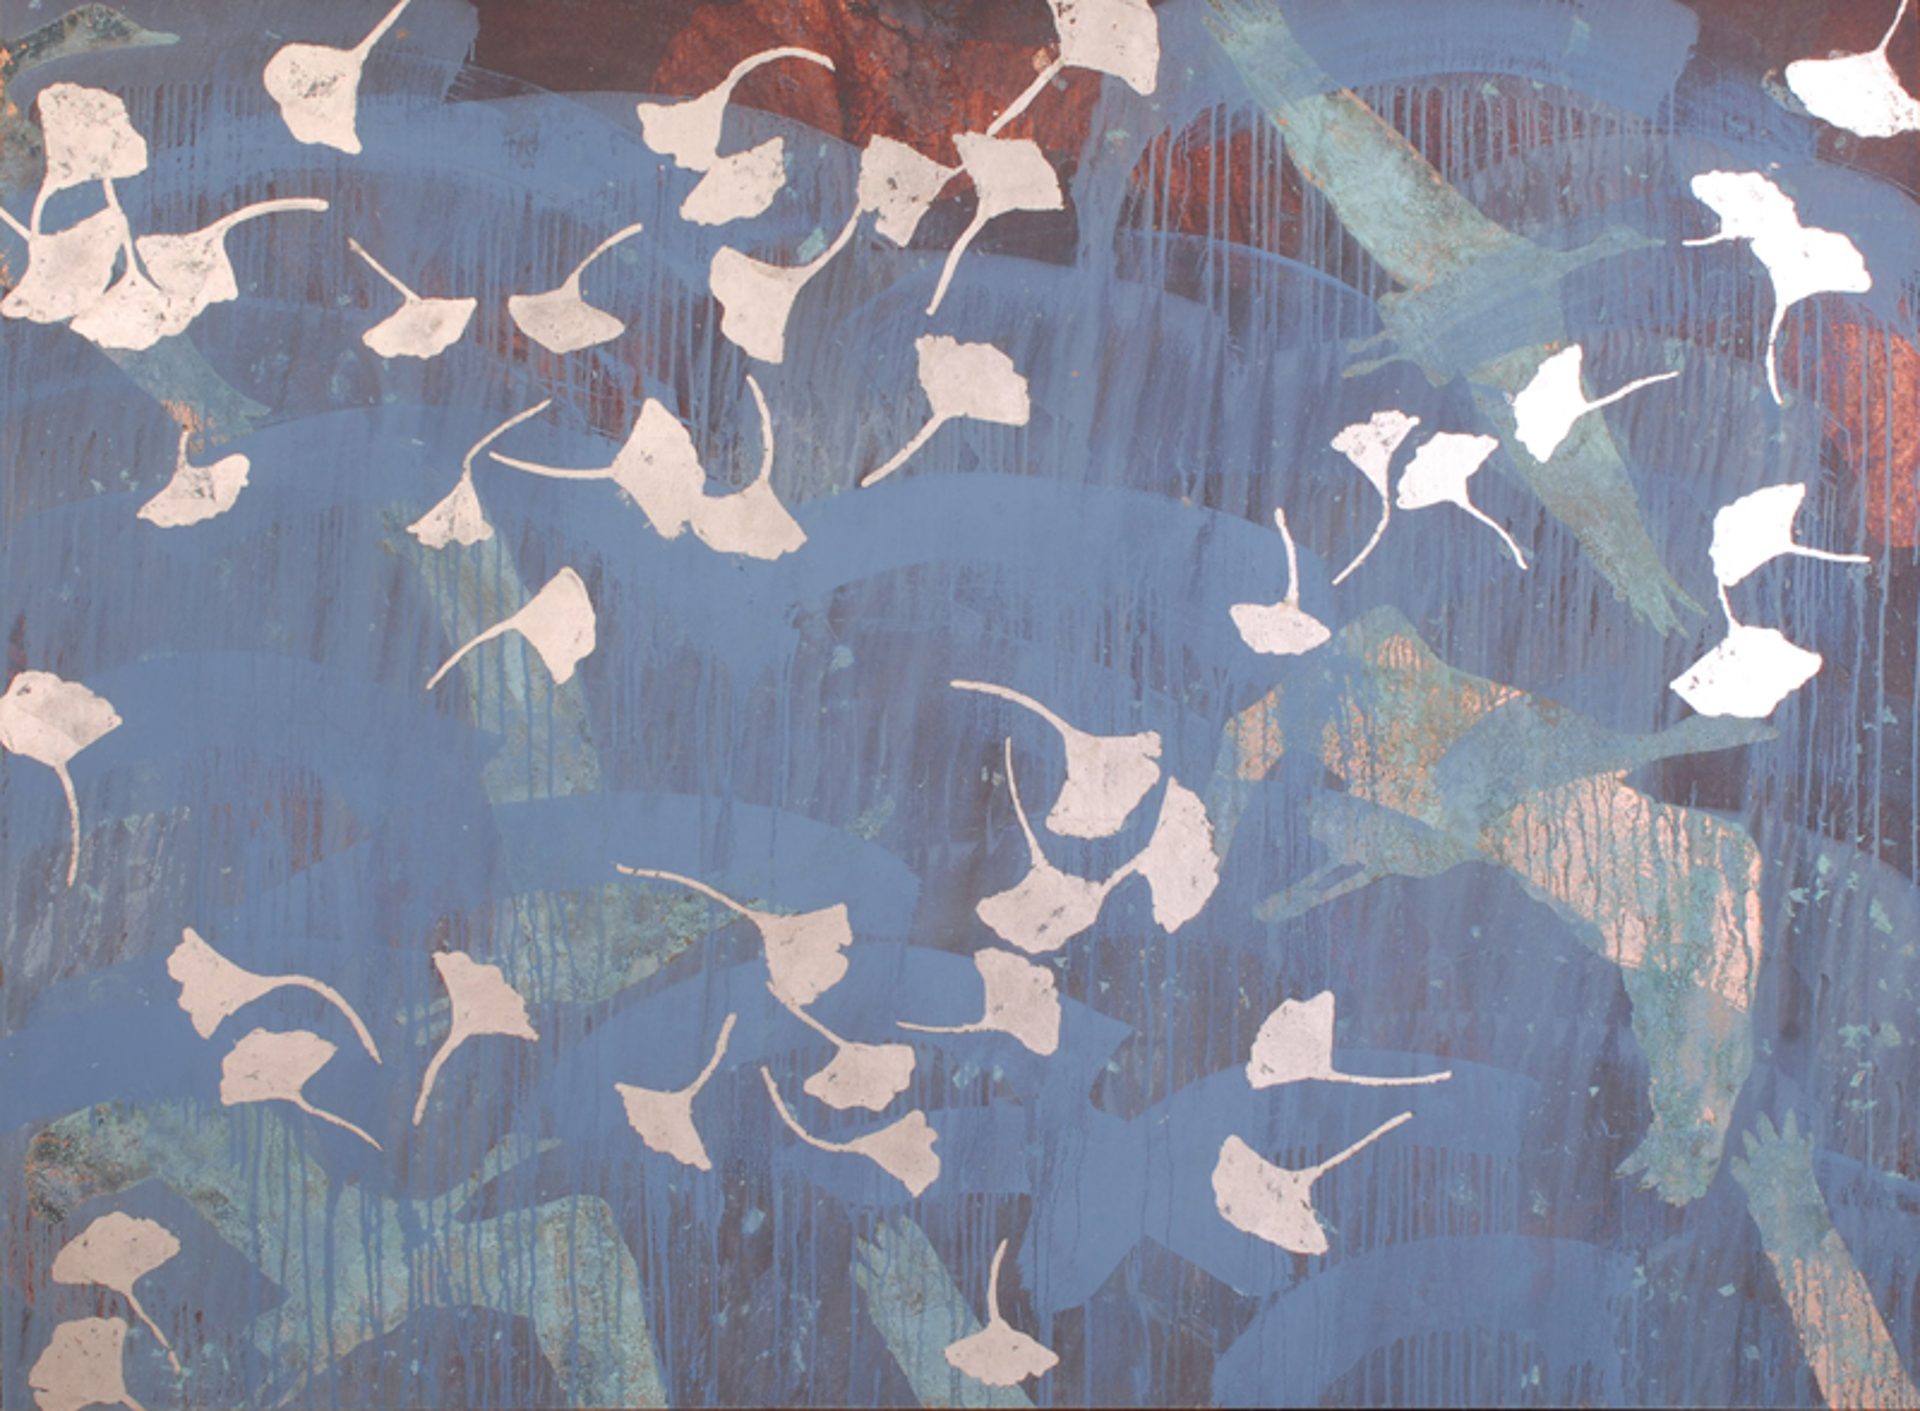 Fall Migration by Thomas Swanston